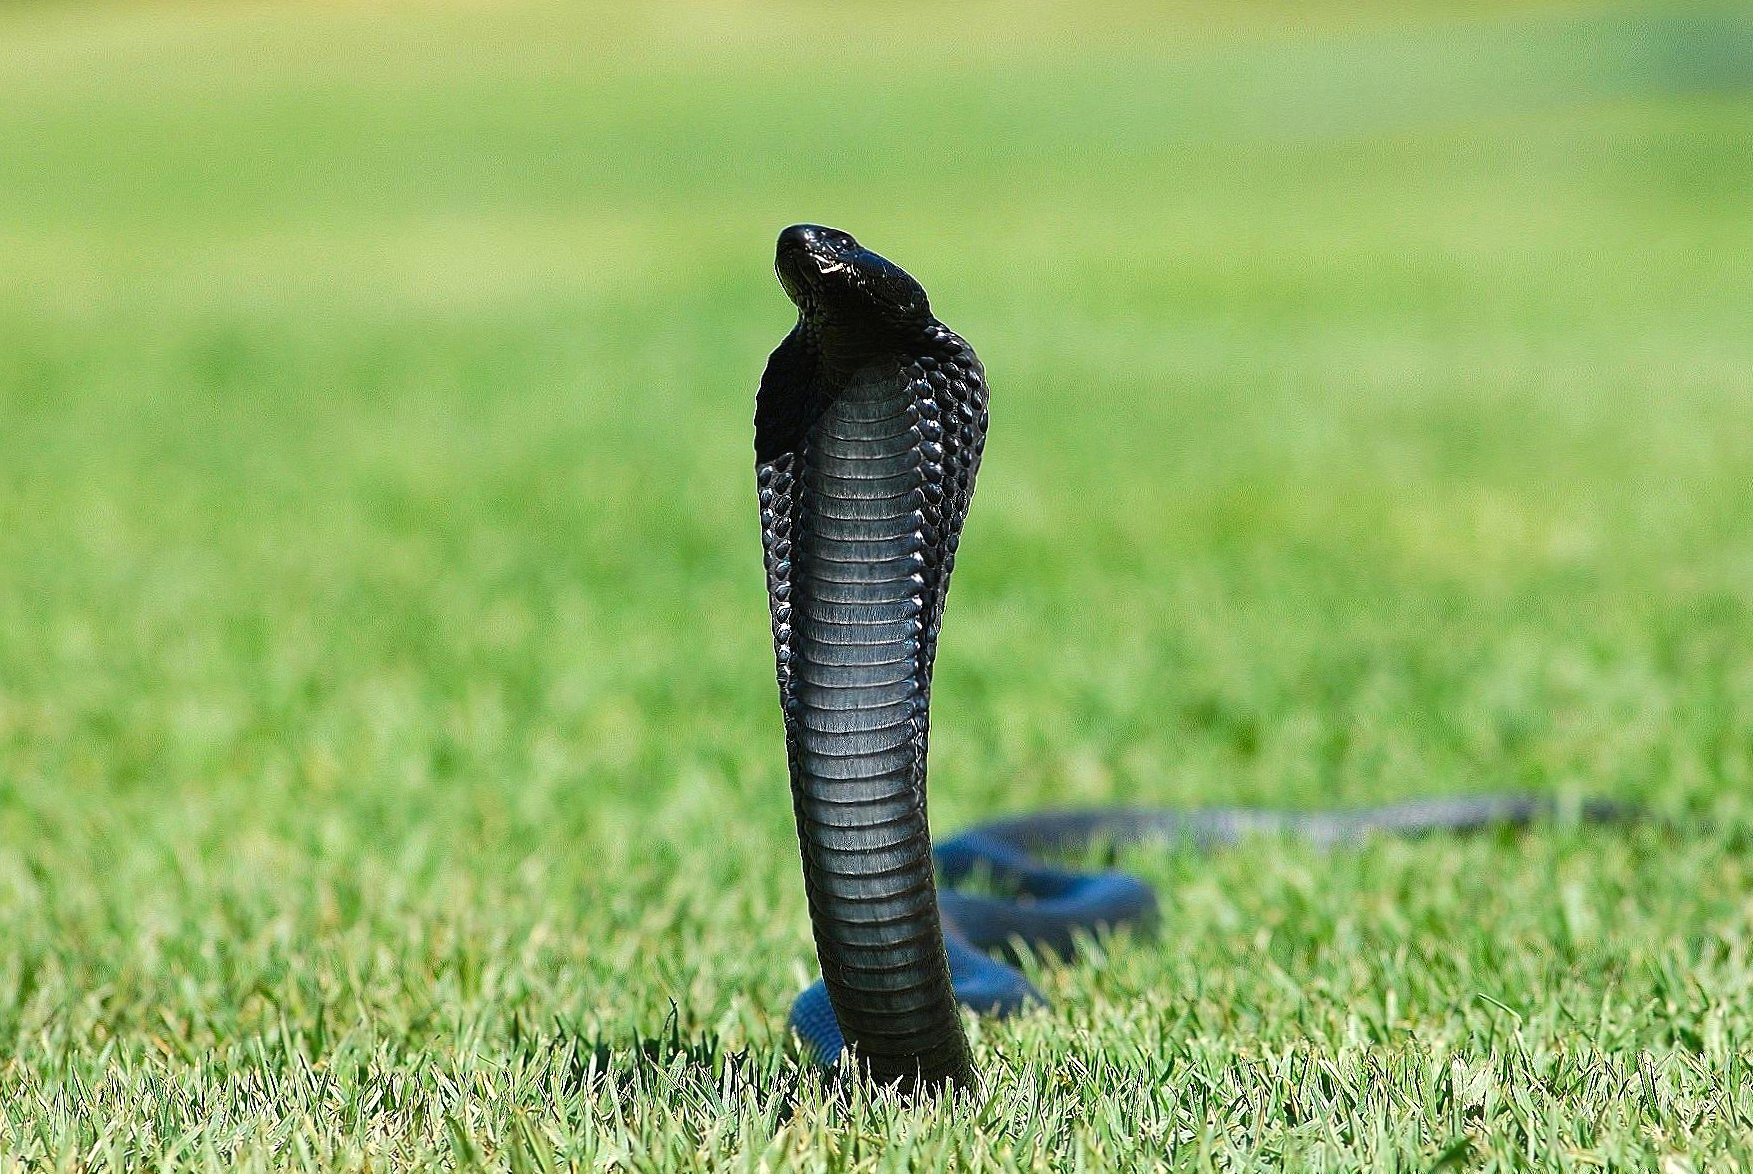 Black cobra snake at 1024 x 1024 iPad size wallpapers HD quality